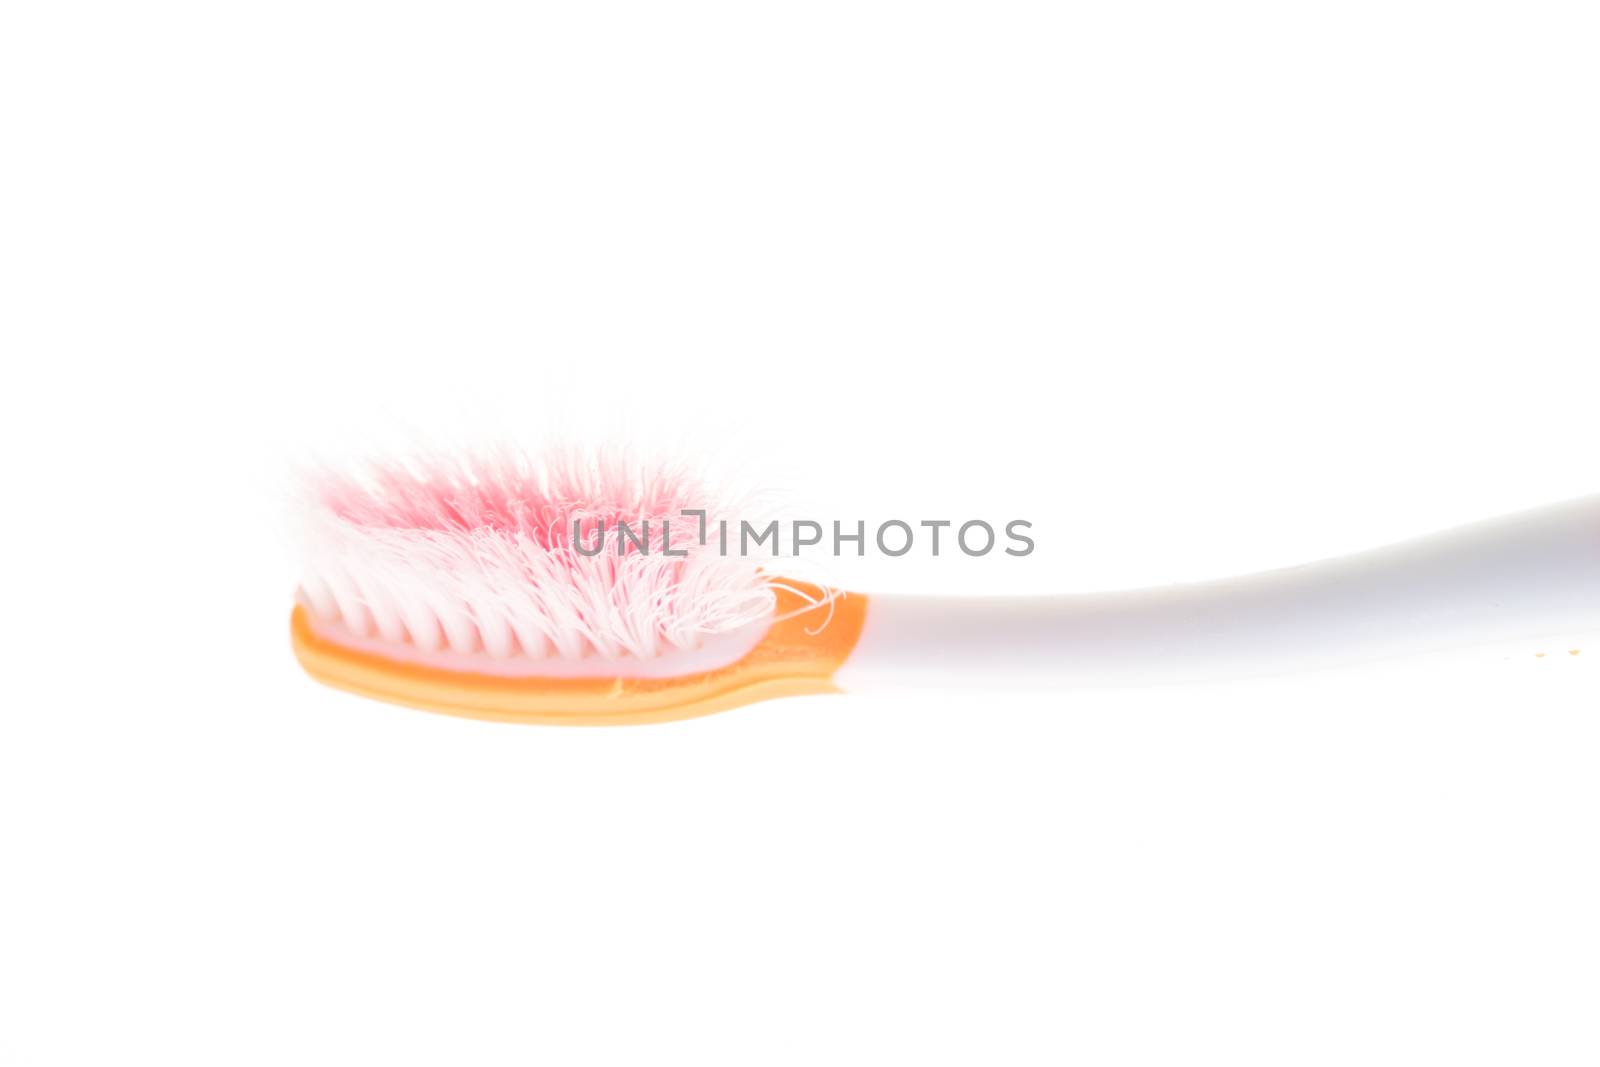 Orange worn toothbrush on isolated white background by iamway